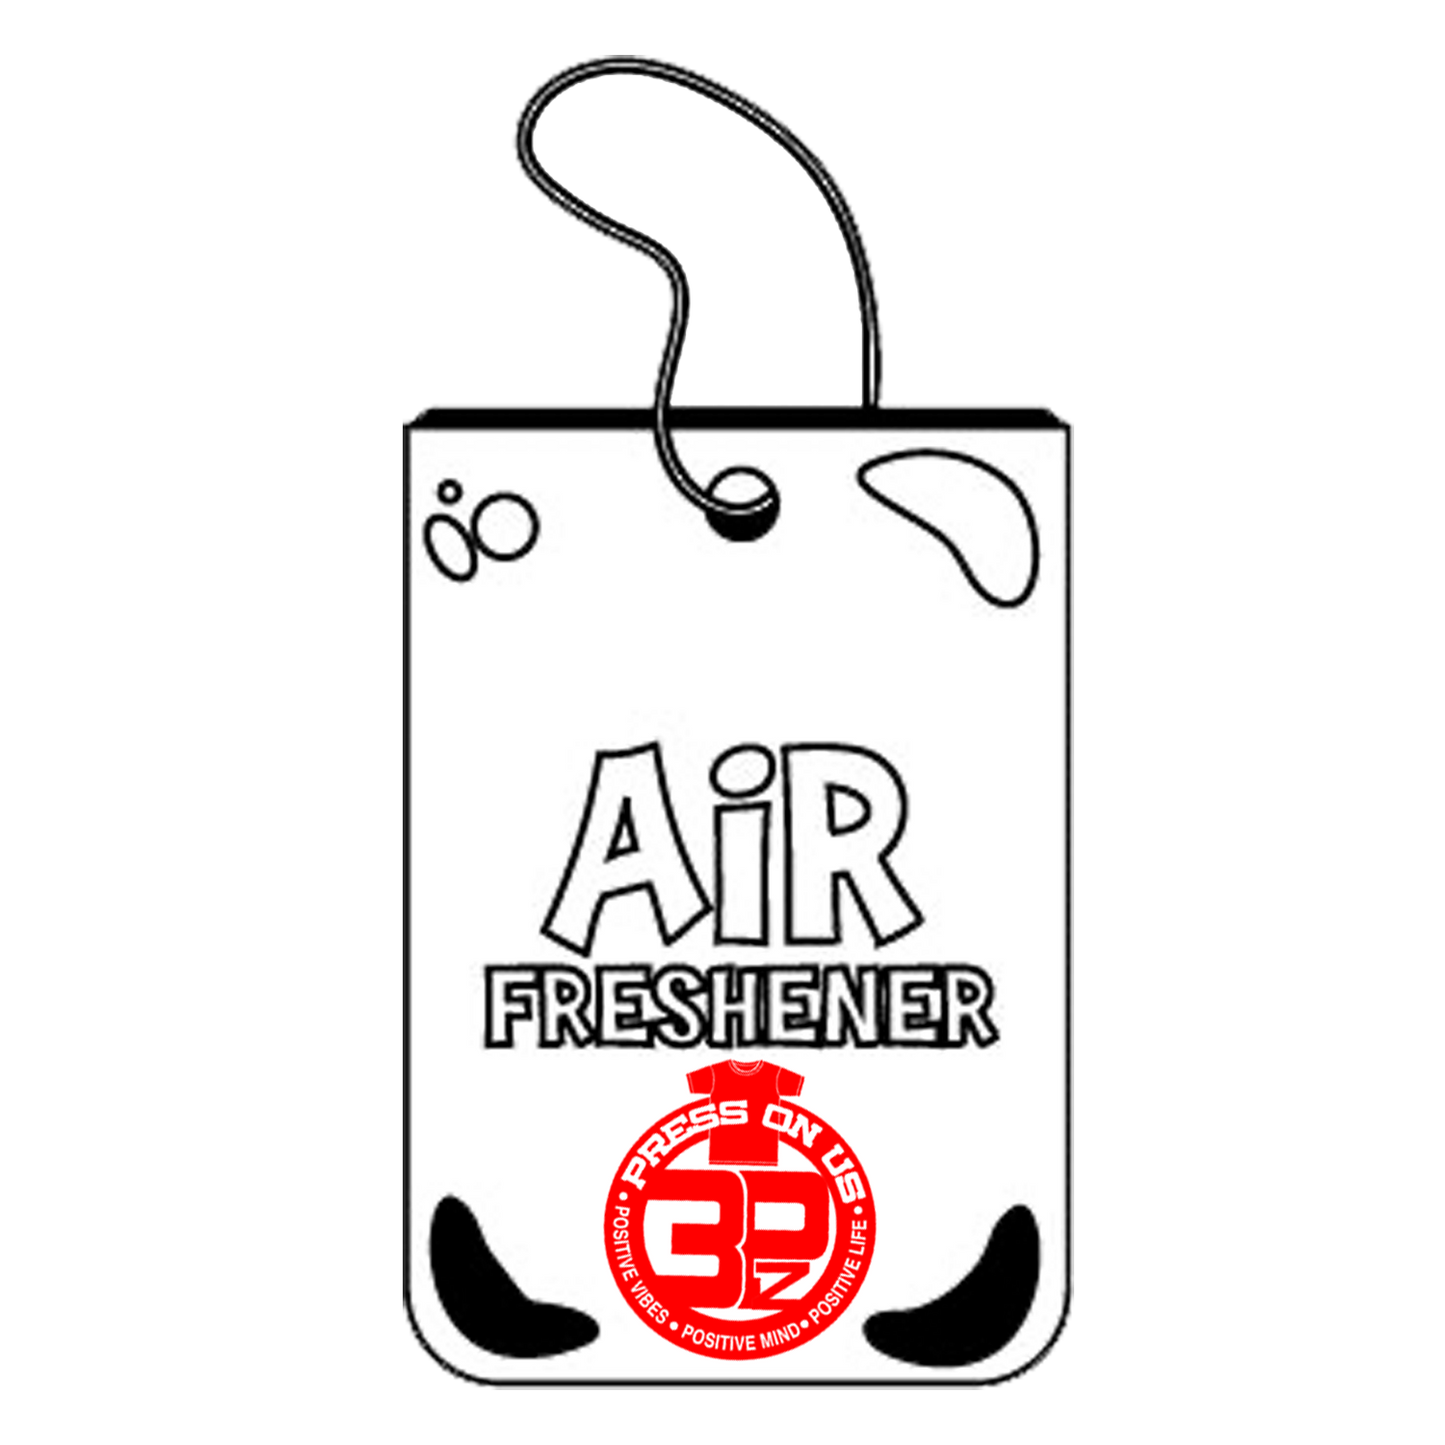 Air Freshener | Press On Us, LLC